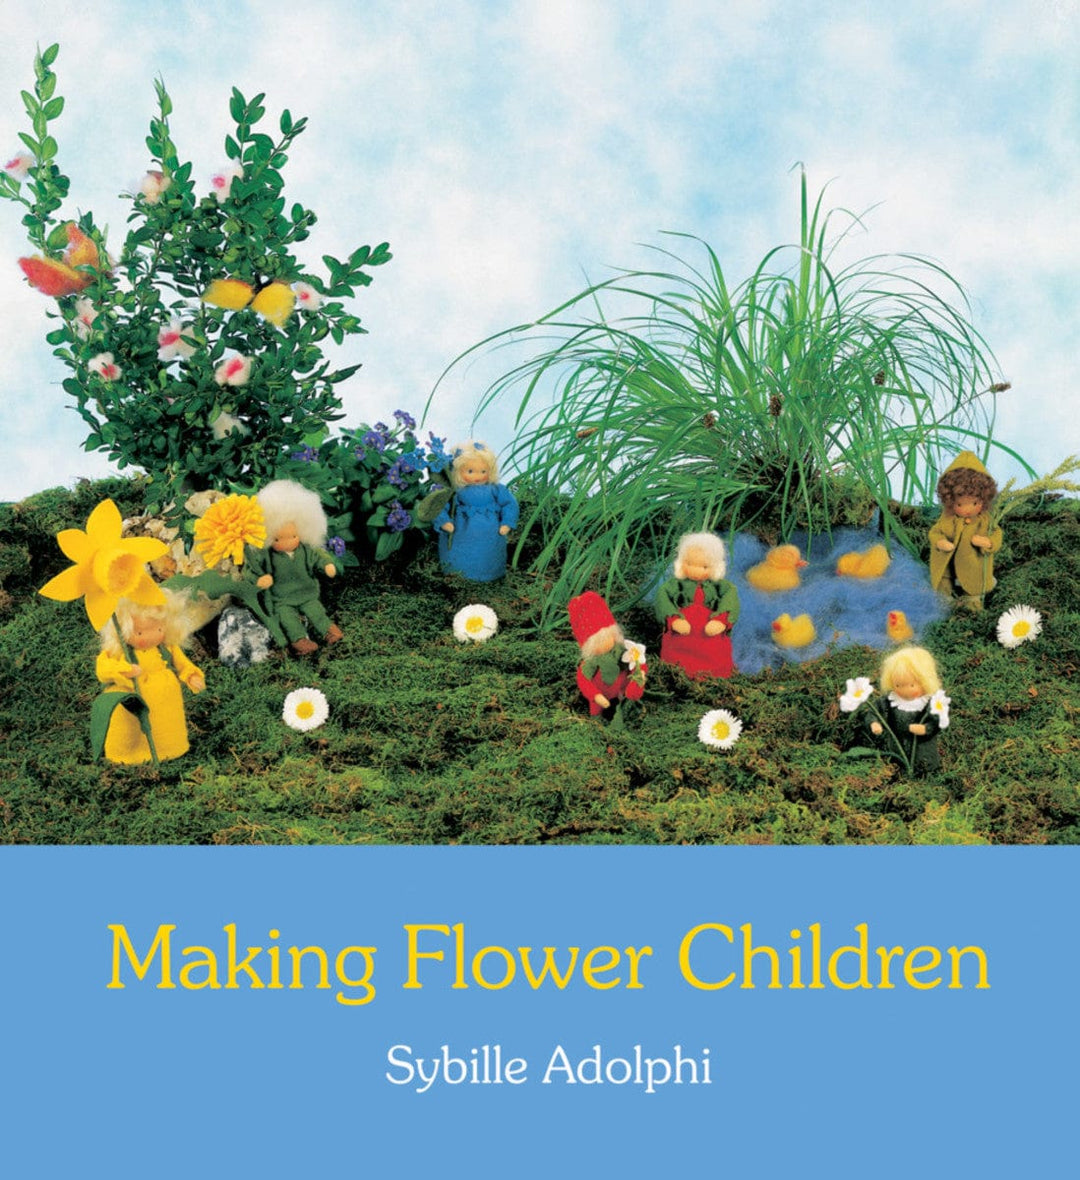 Default Making Flower Children by Sybille Adolphi